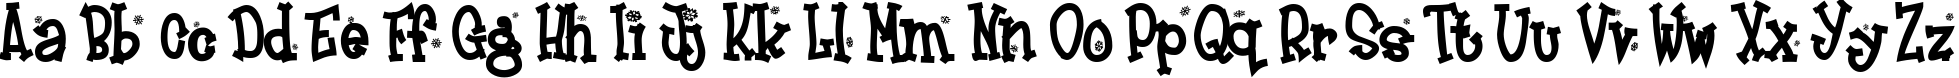 Пример написания английского алфавита шрифтом Frosty